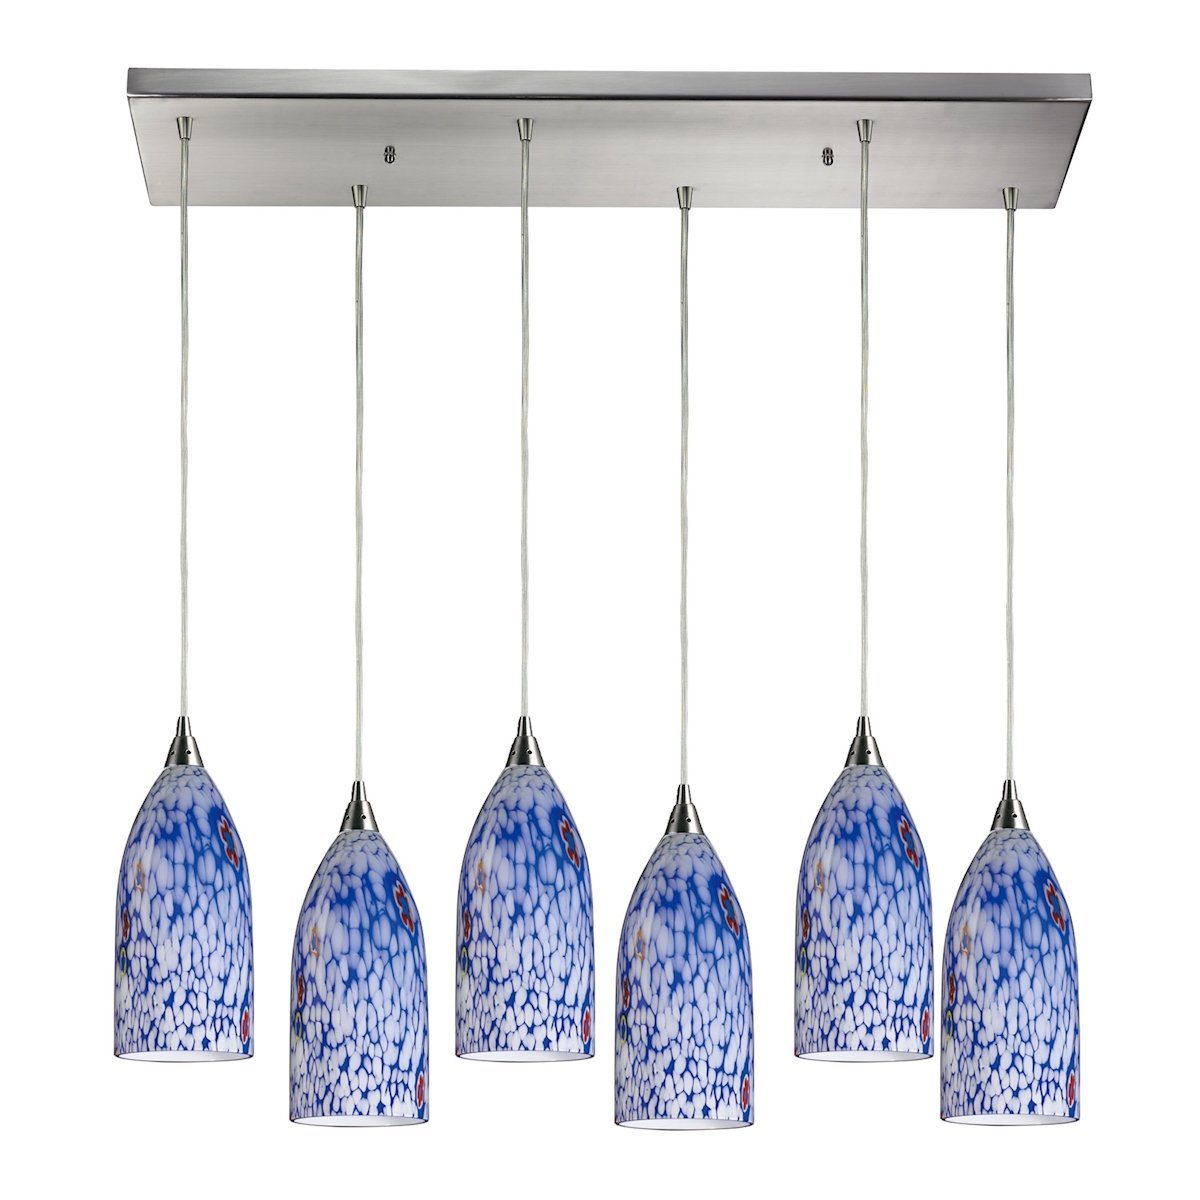 Verona 6 Light Pendant In Satin Nickel And Starburst Blue Glass Ceiling Elk Lighting 